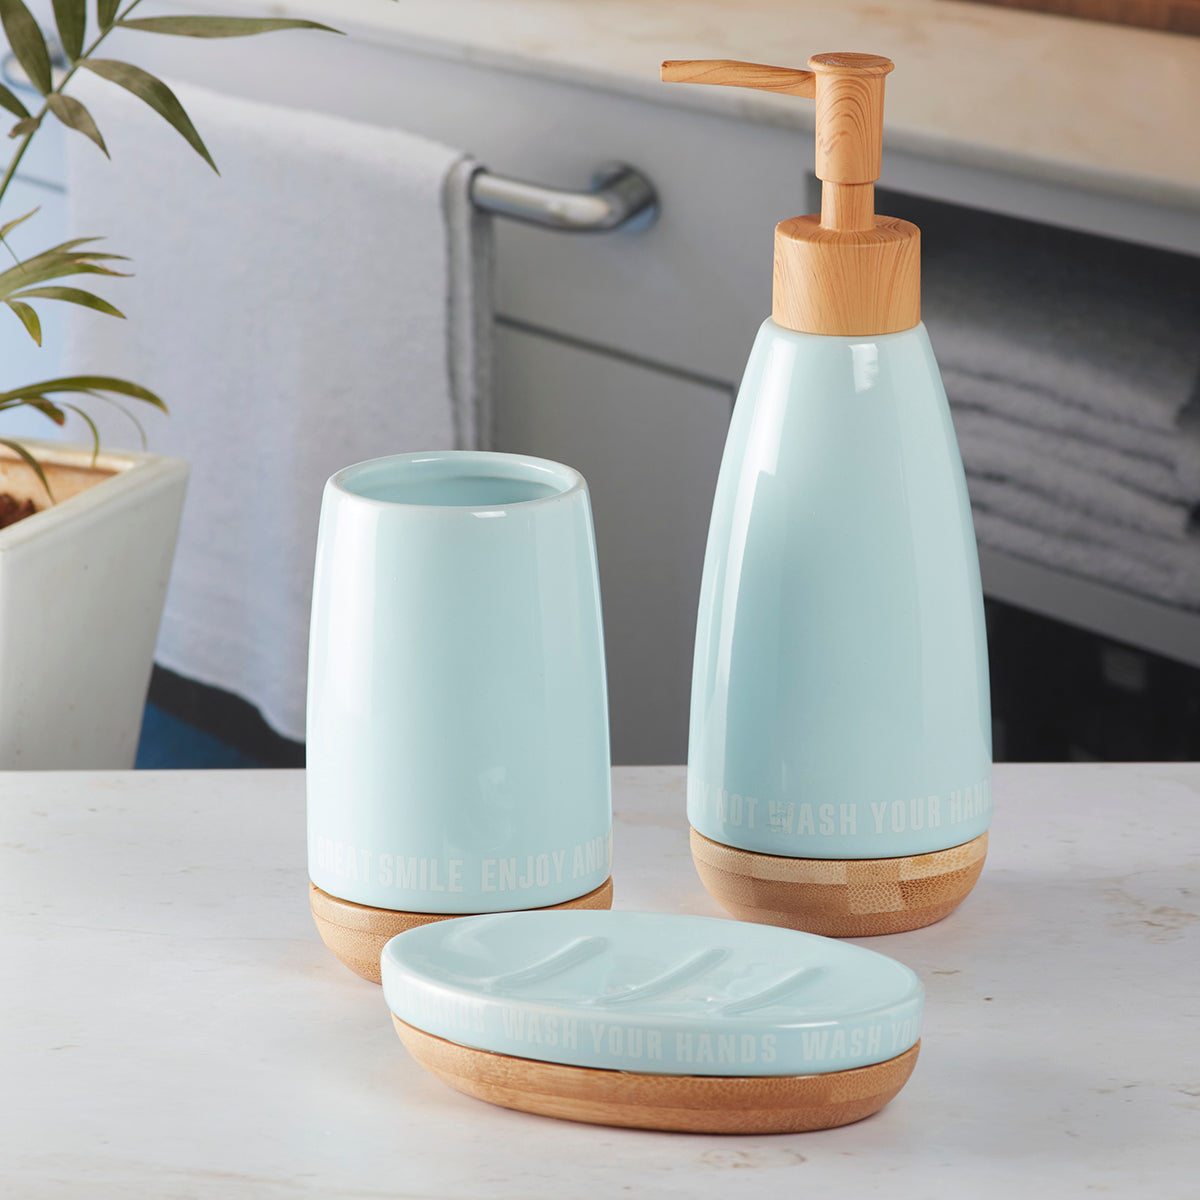 Ceramic Bathroom Accessories Set of 3 Bath Set with Soap Dispenser (9884)